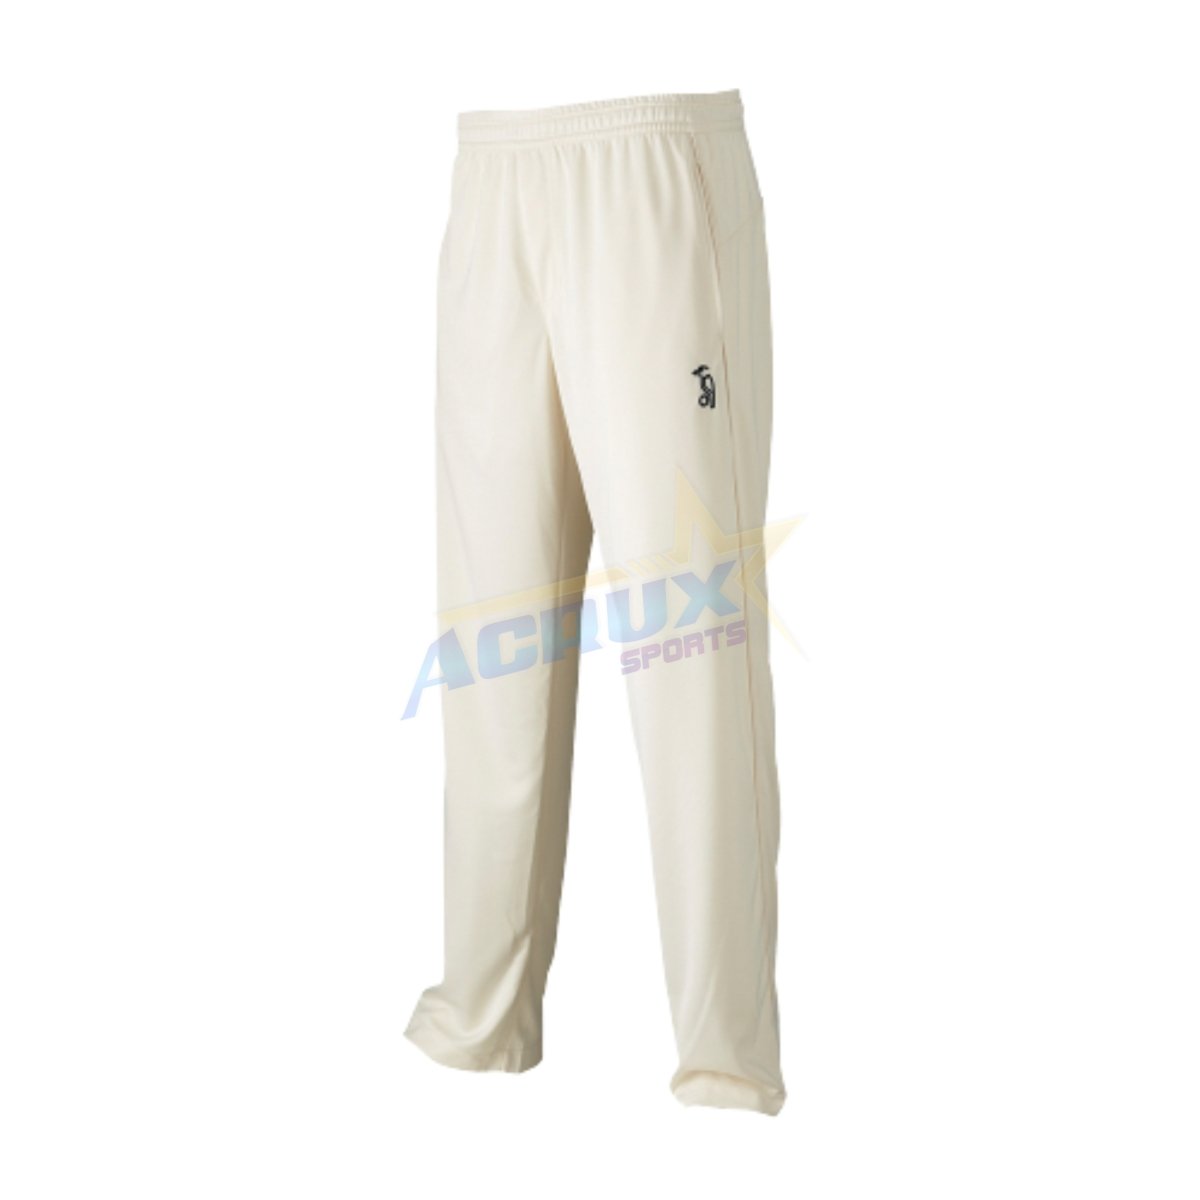 Kookaburra Pro Active Cricket Pants Cream.